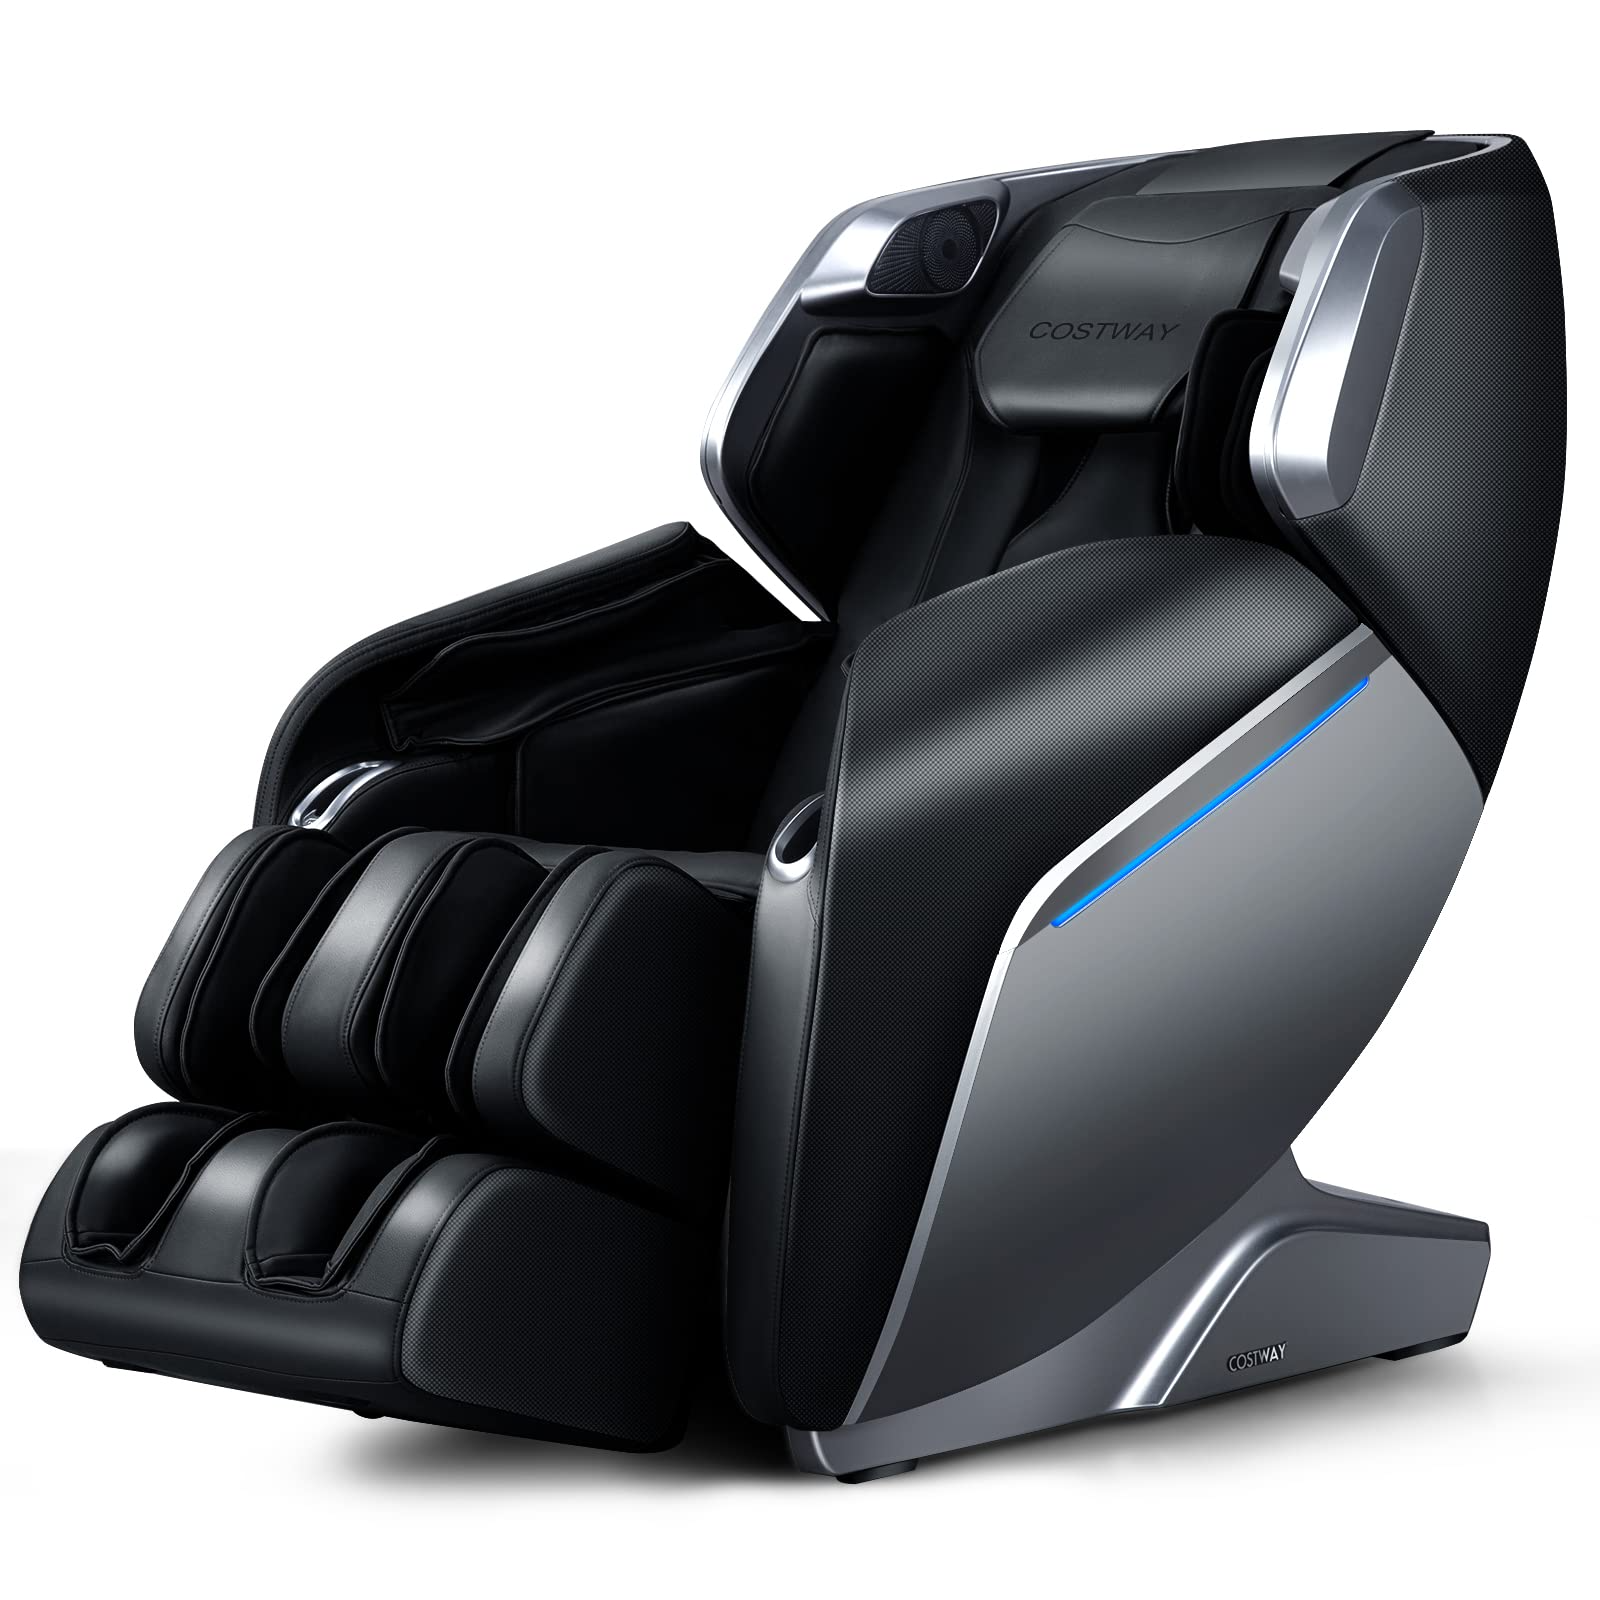 Giantex Massage Chair Full Body